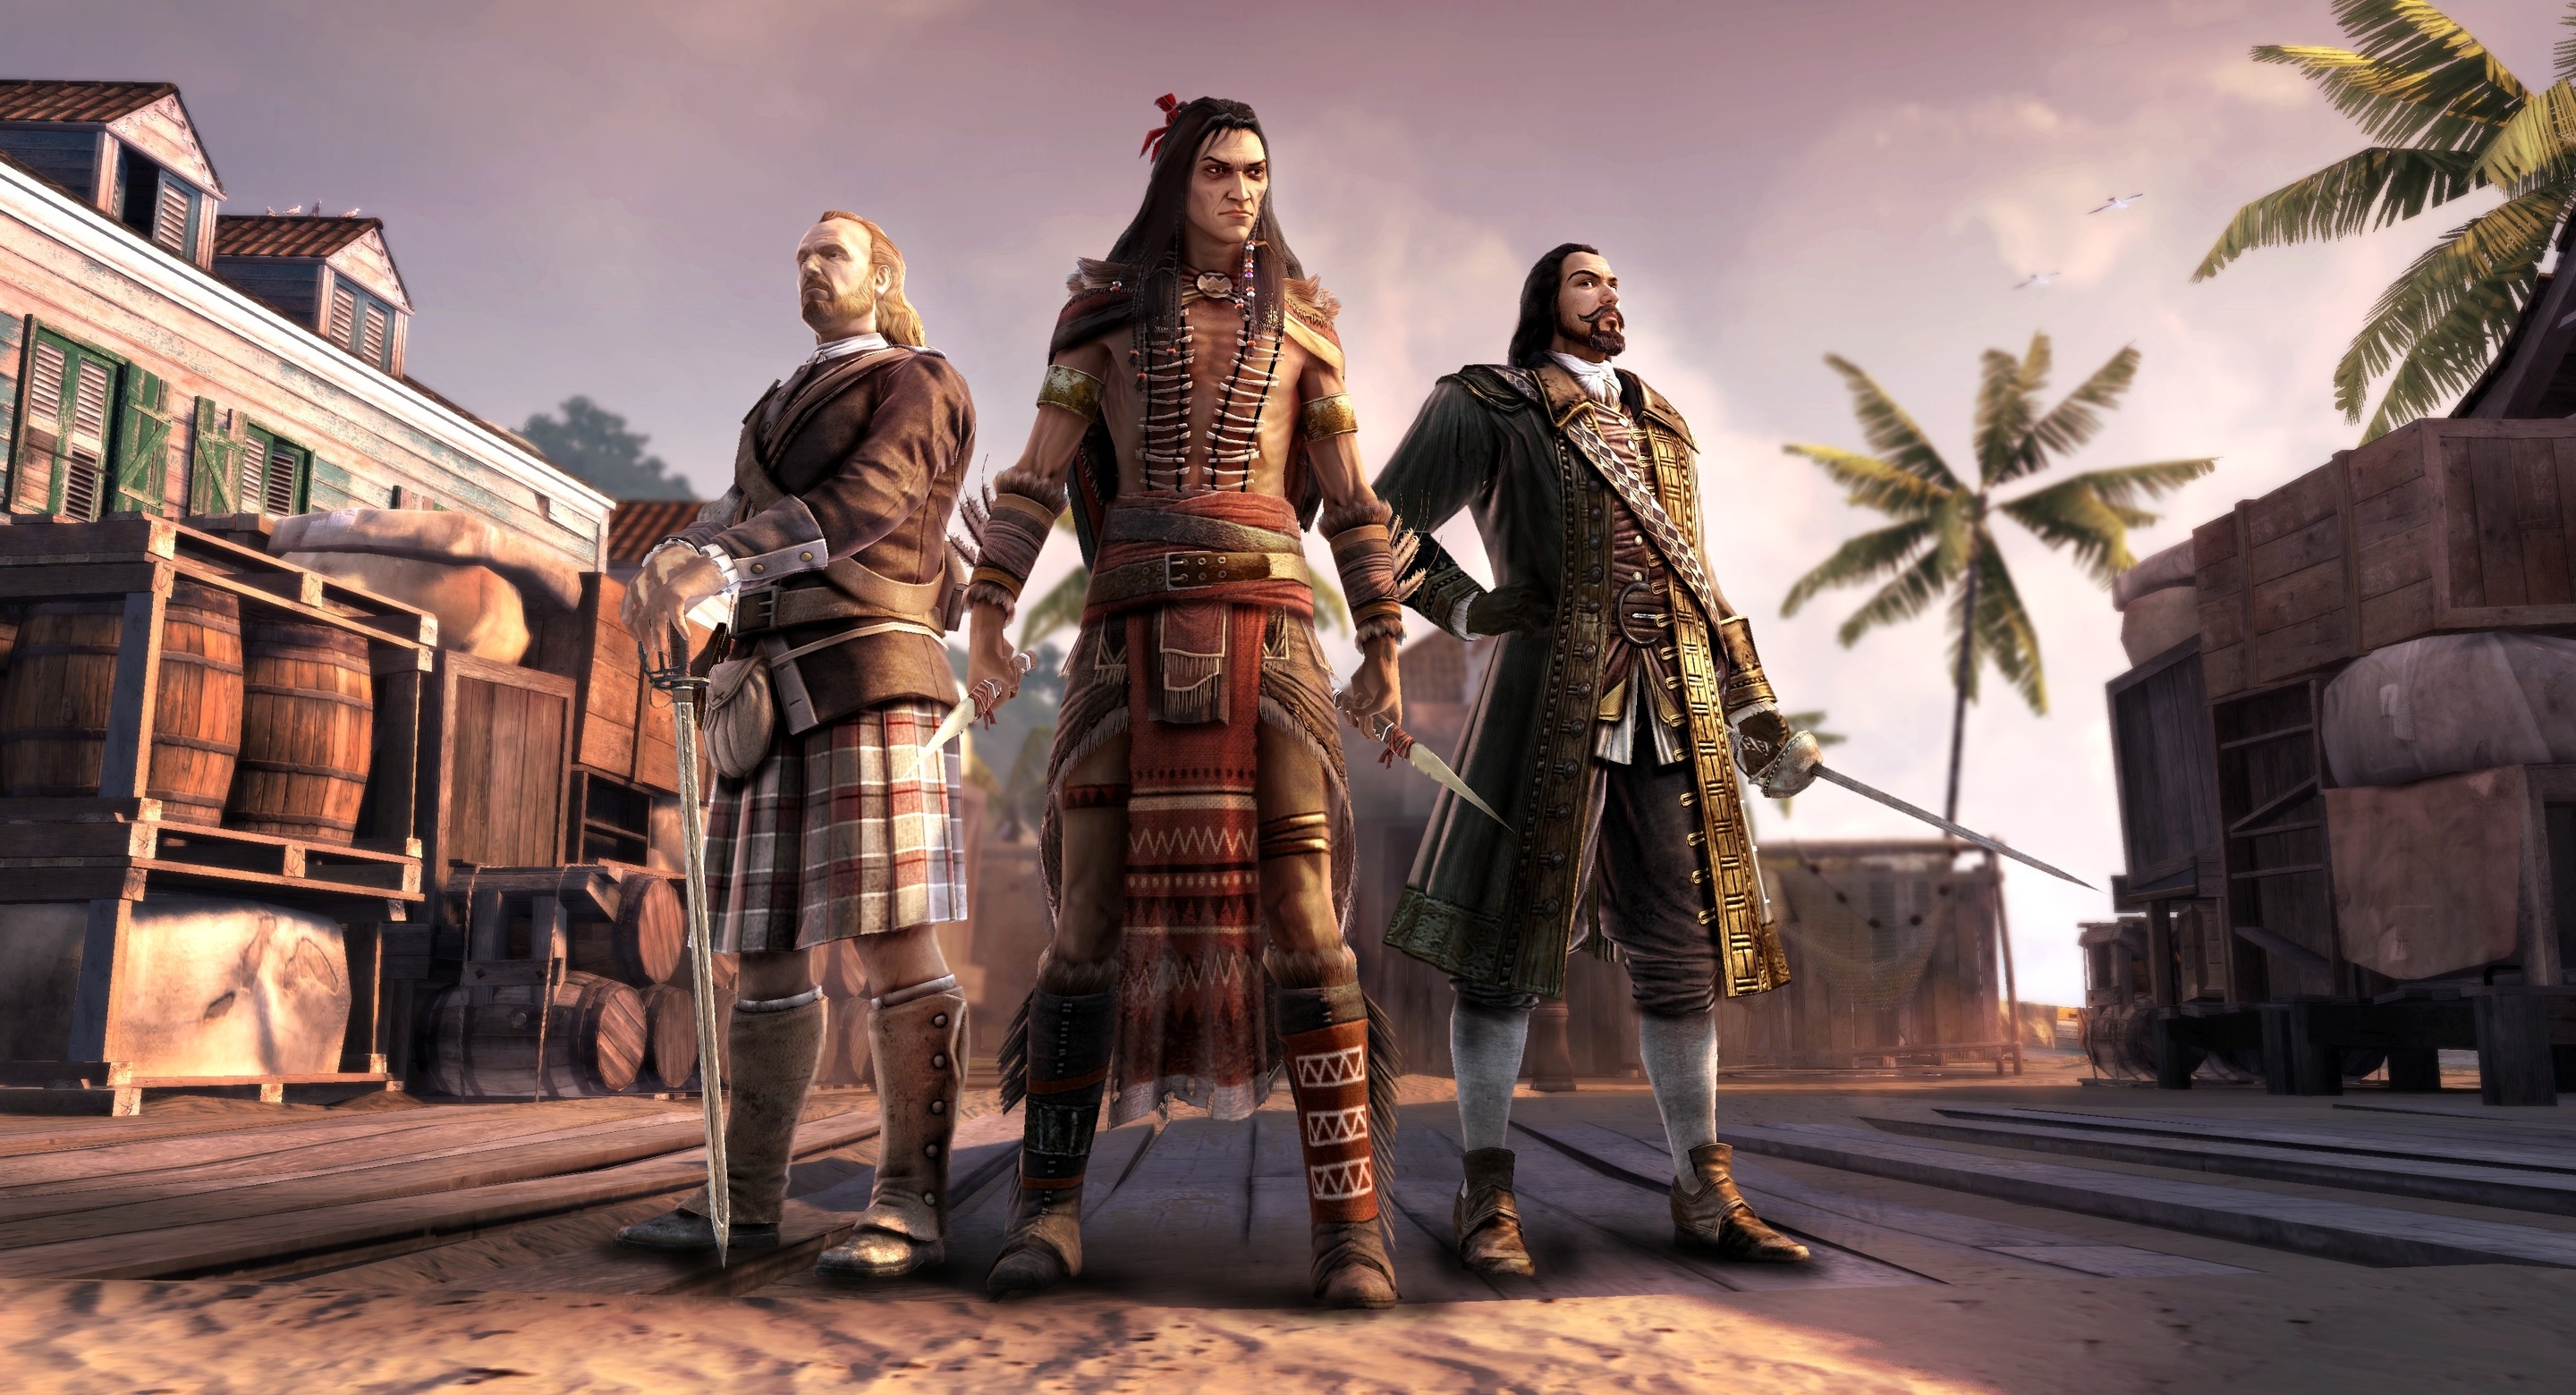 Assassin`s Creed 3. Assassin's Creed III: Battle hardened Pack. Assassin's Creed III Remastered. Assassin's Creed 3 DLC. Обновление ассасин крид